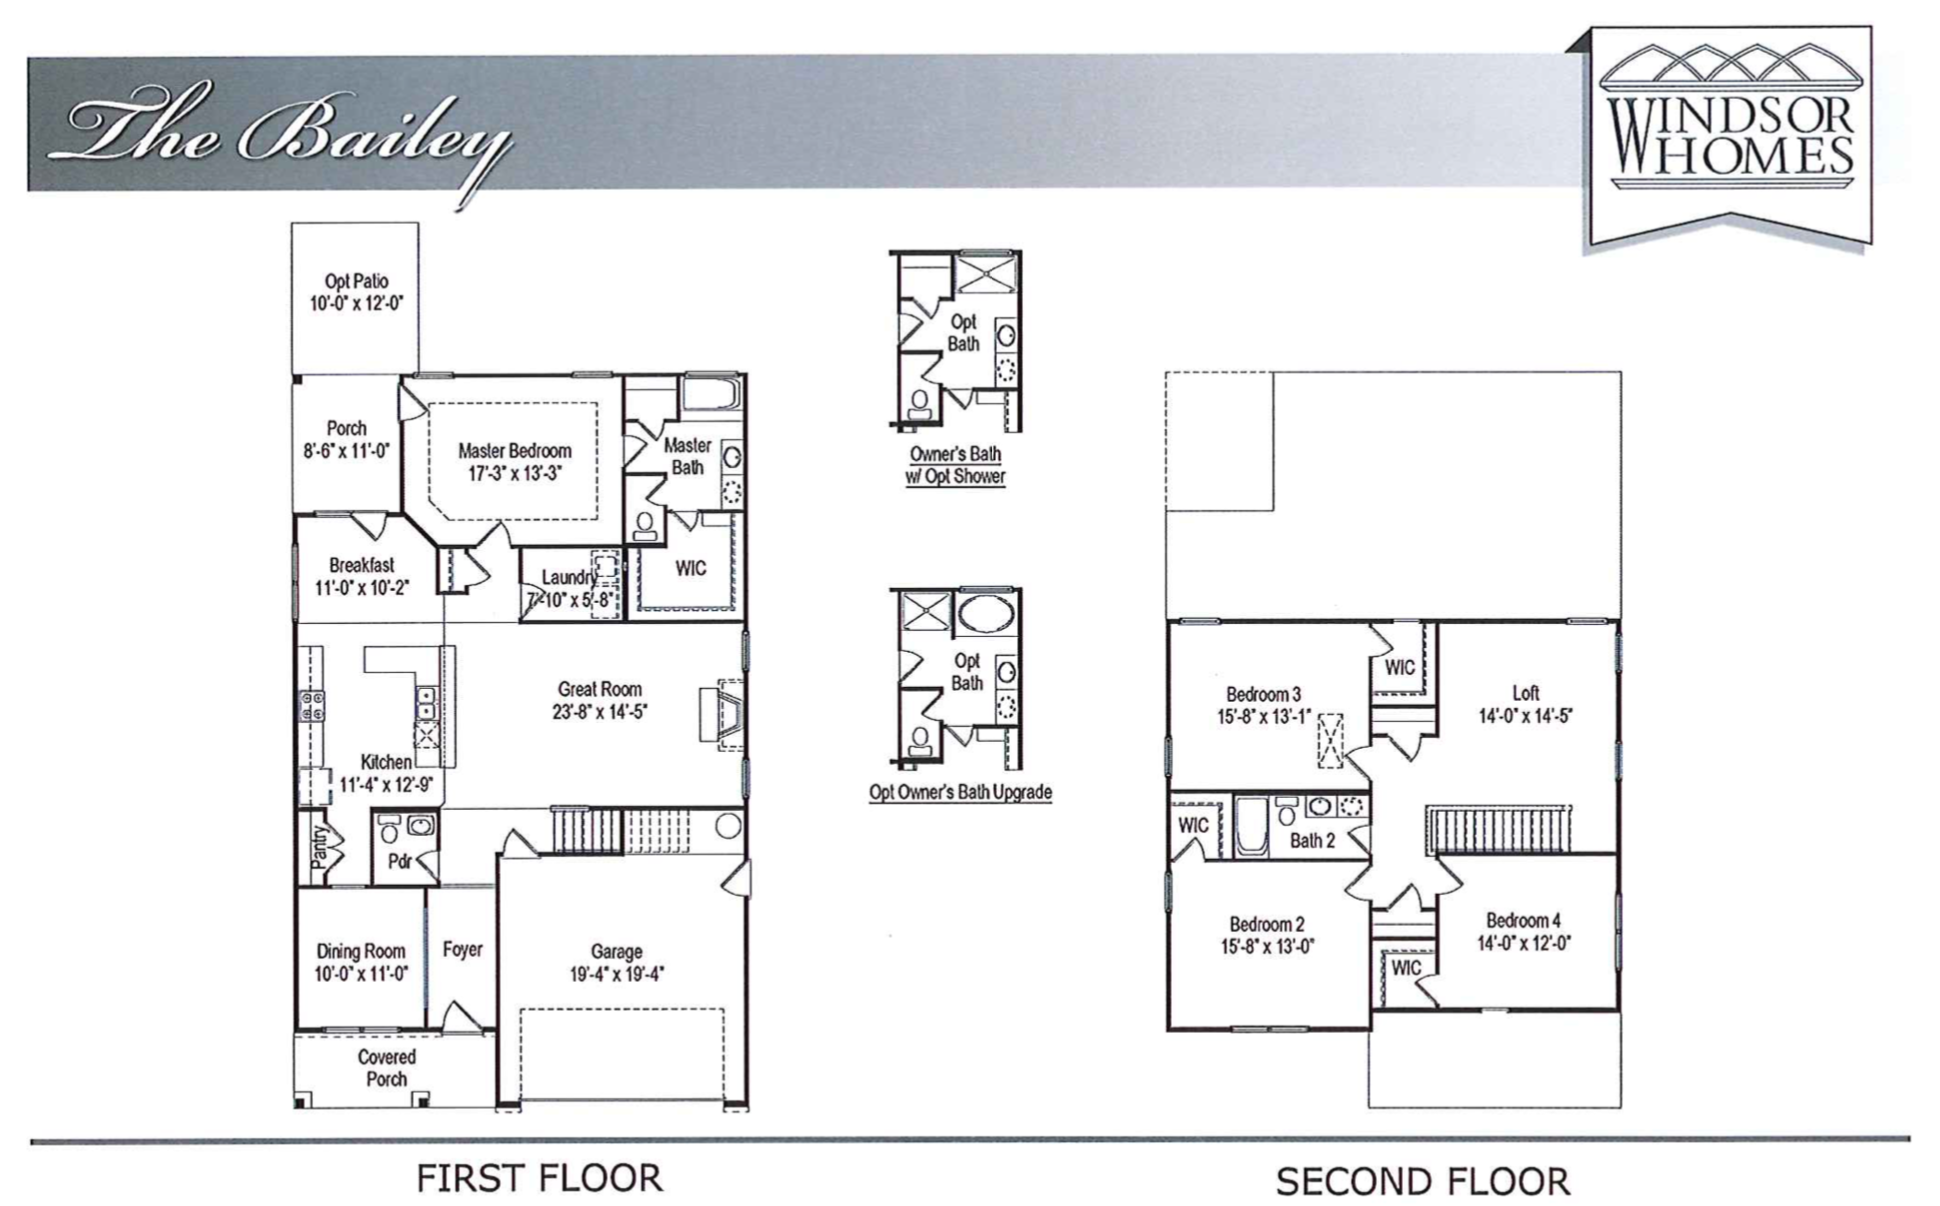 The Bailey-Windsor Homes floor plan image